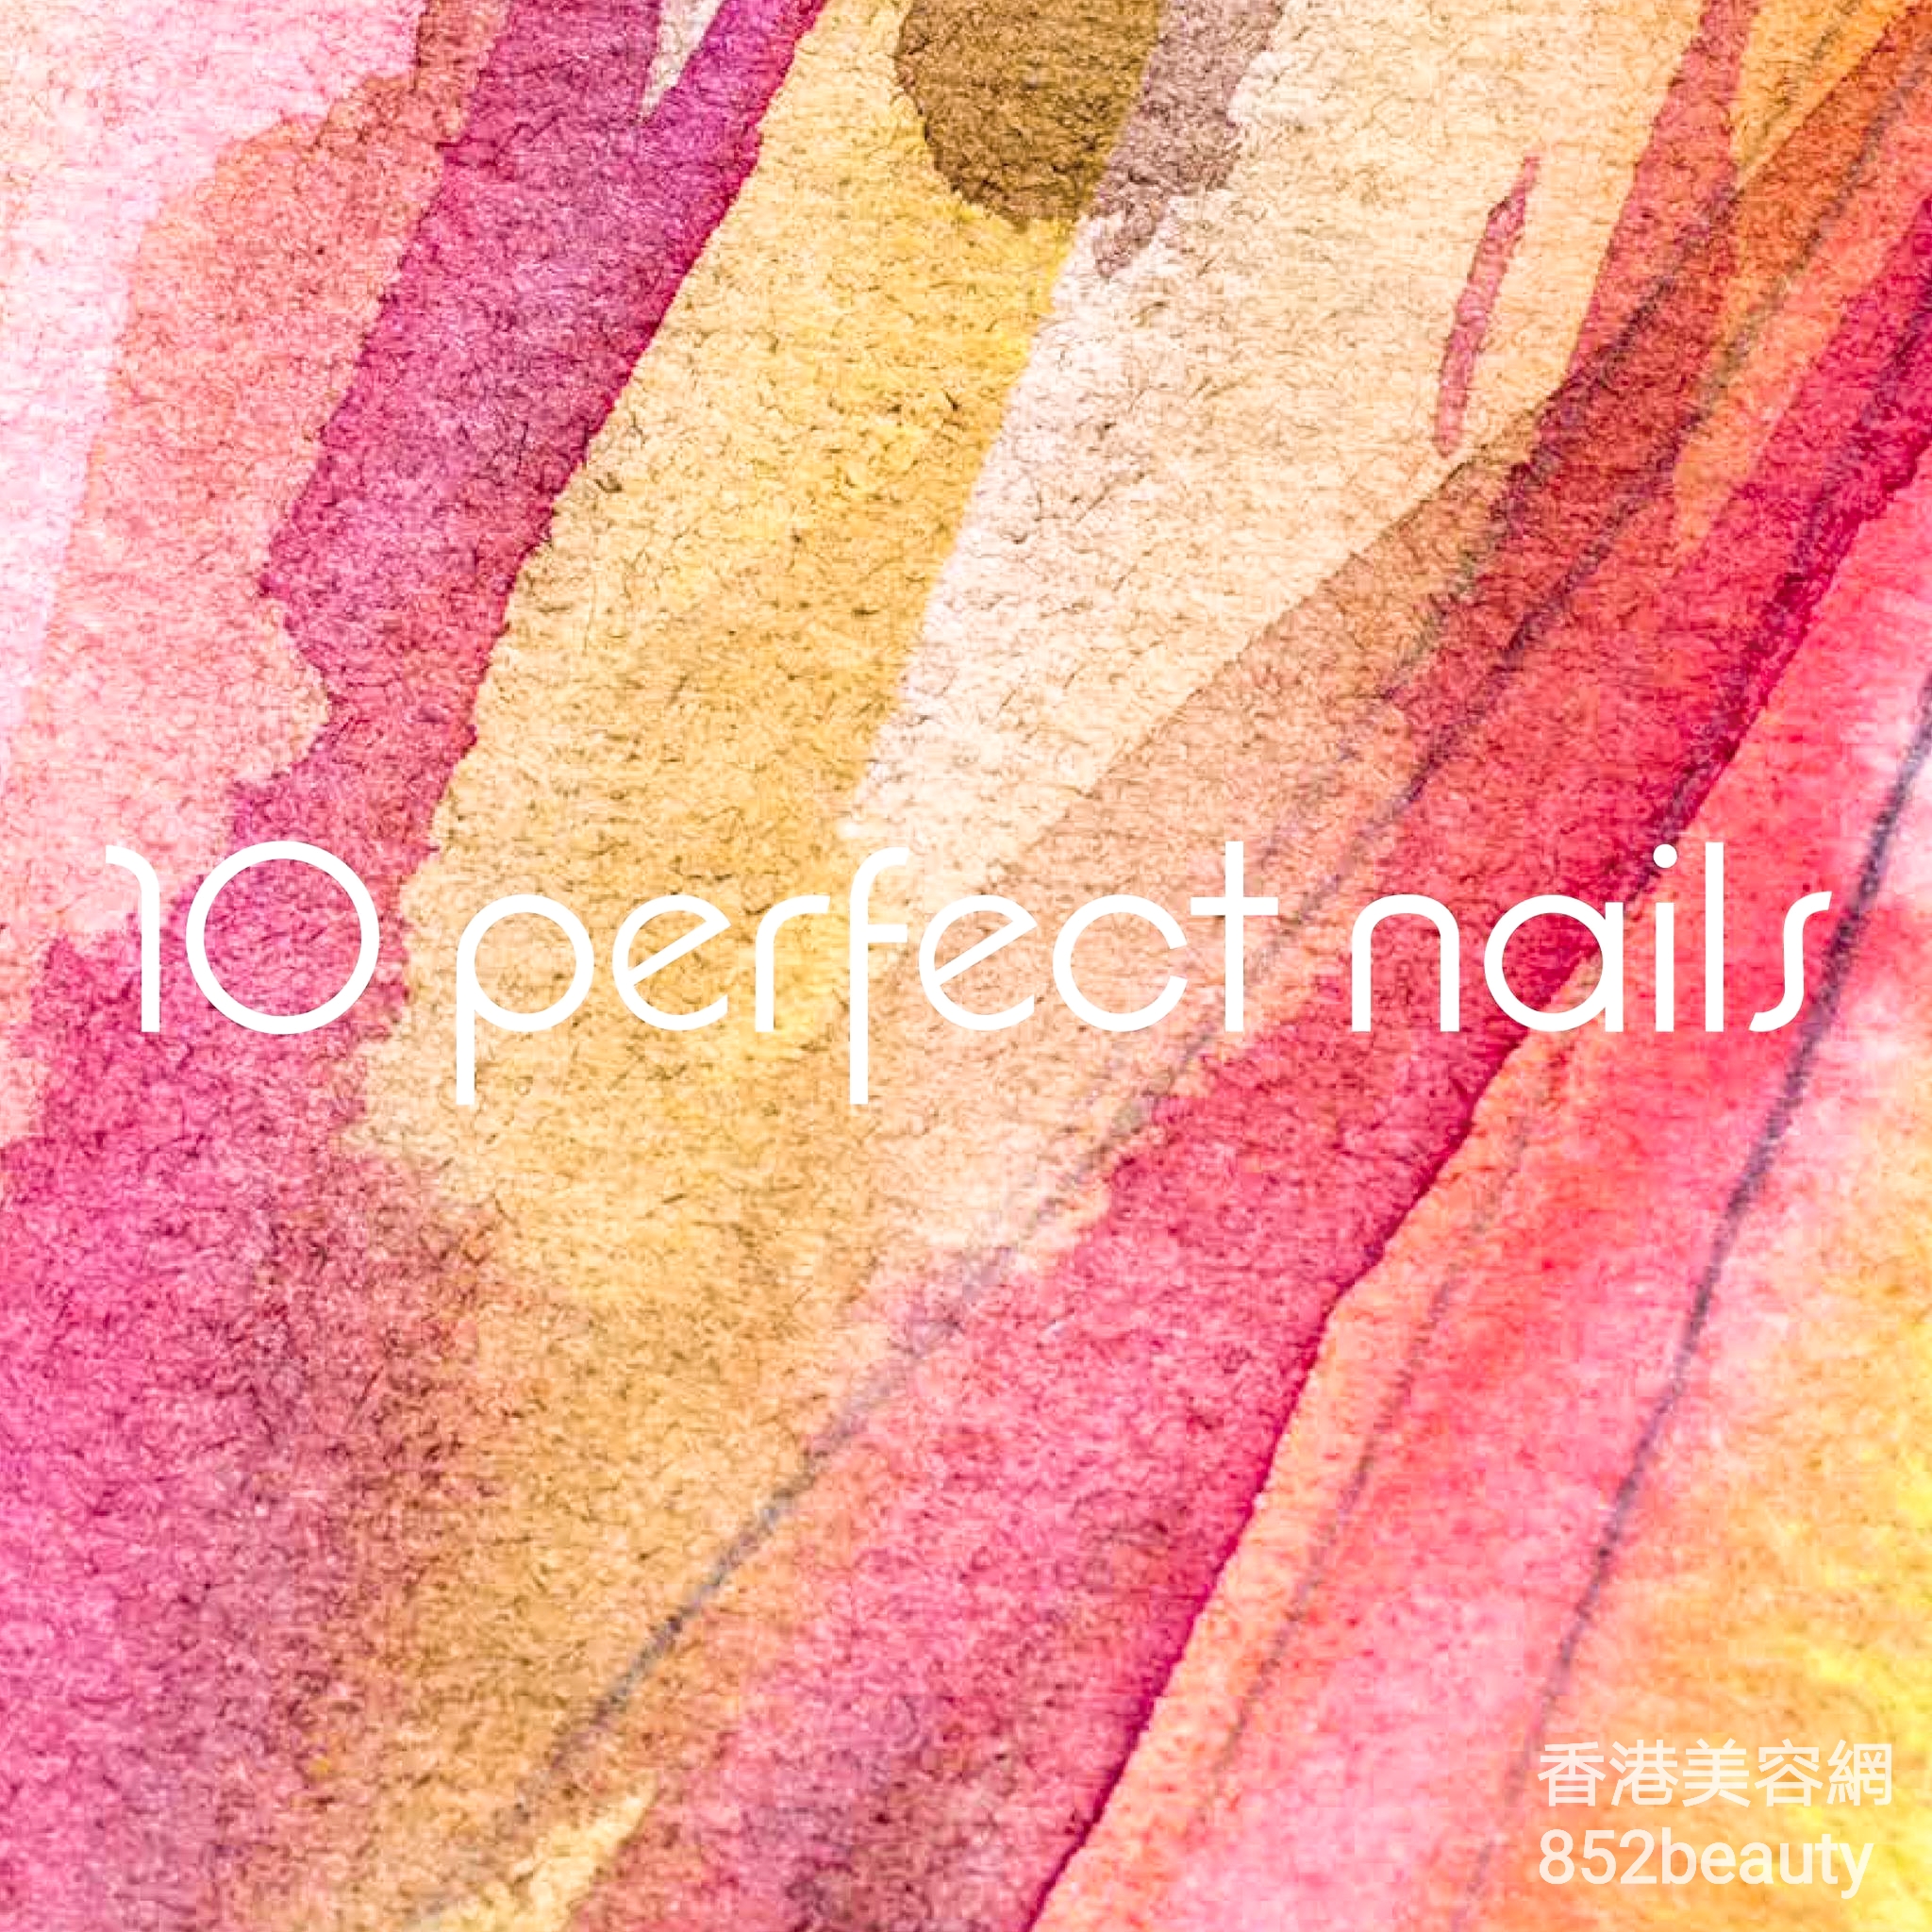 香港美容網 Hong Kong Beauty Salon 美容院 / 美容師: 10 Perfect Nails (中環店)